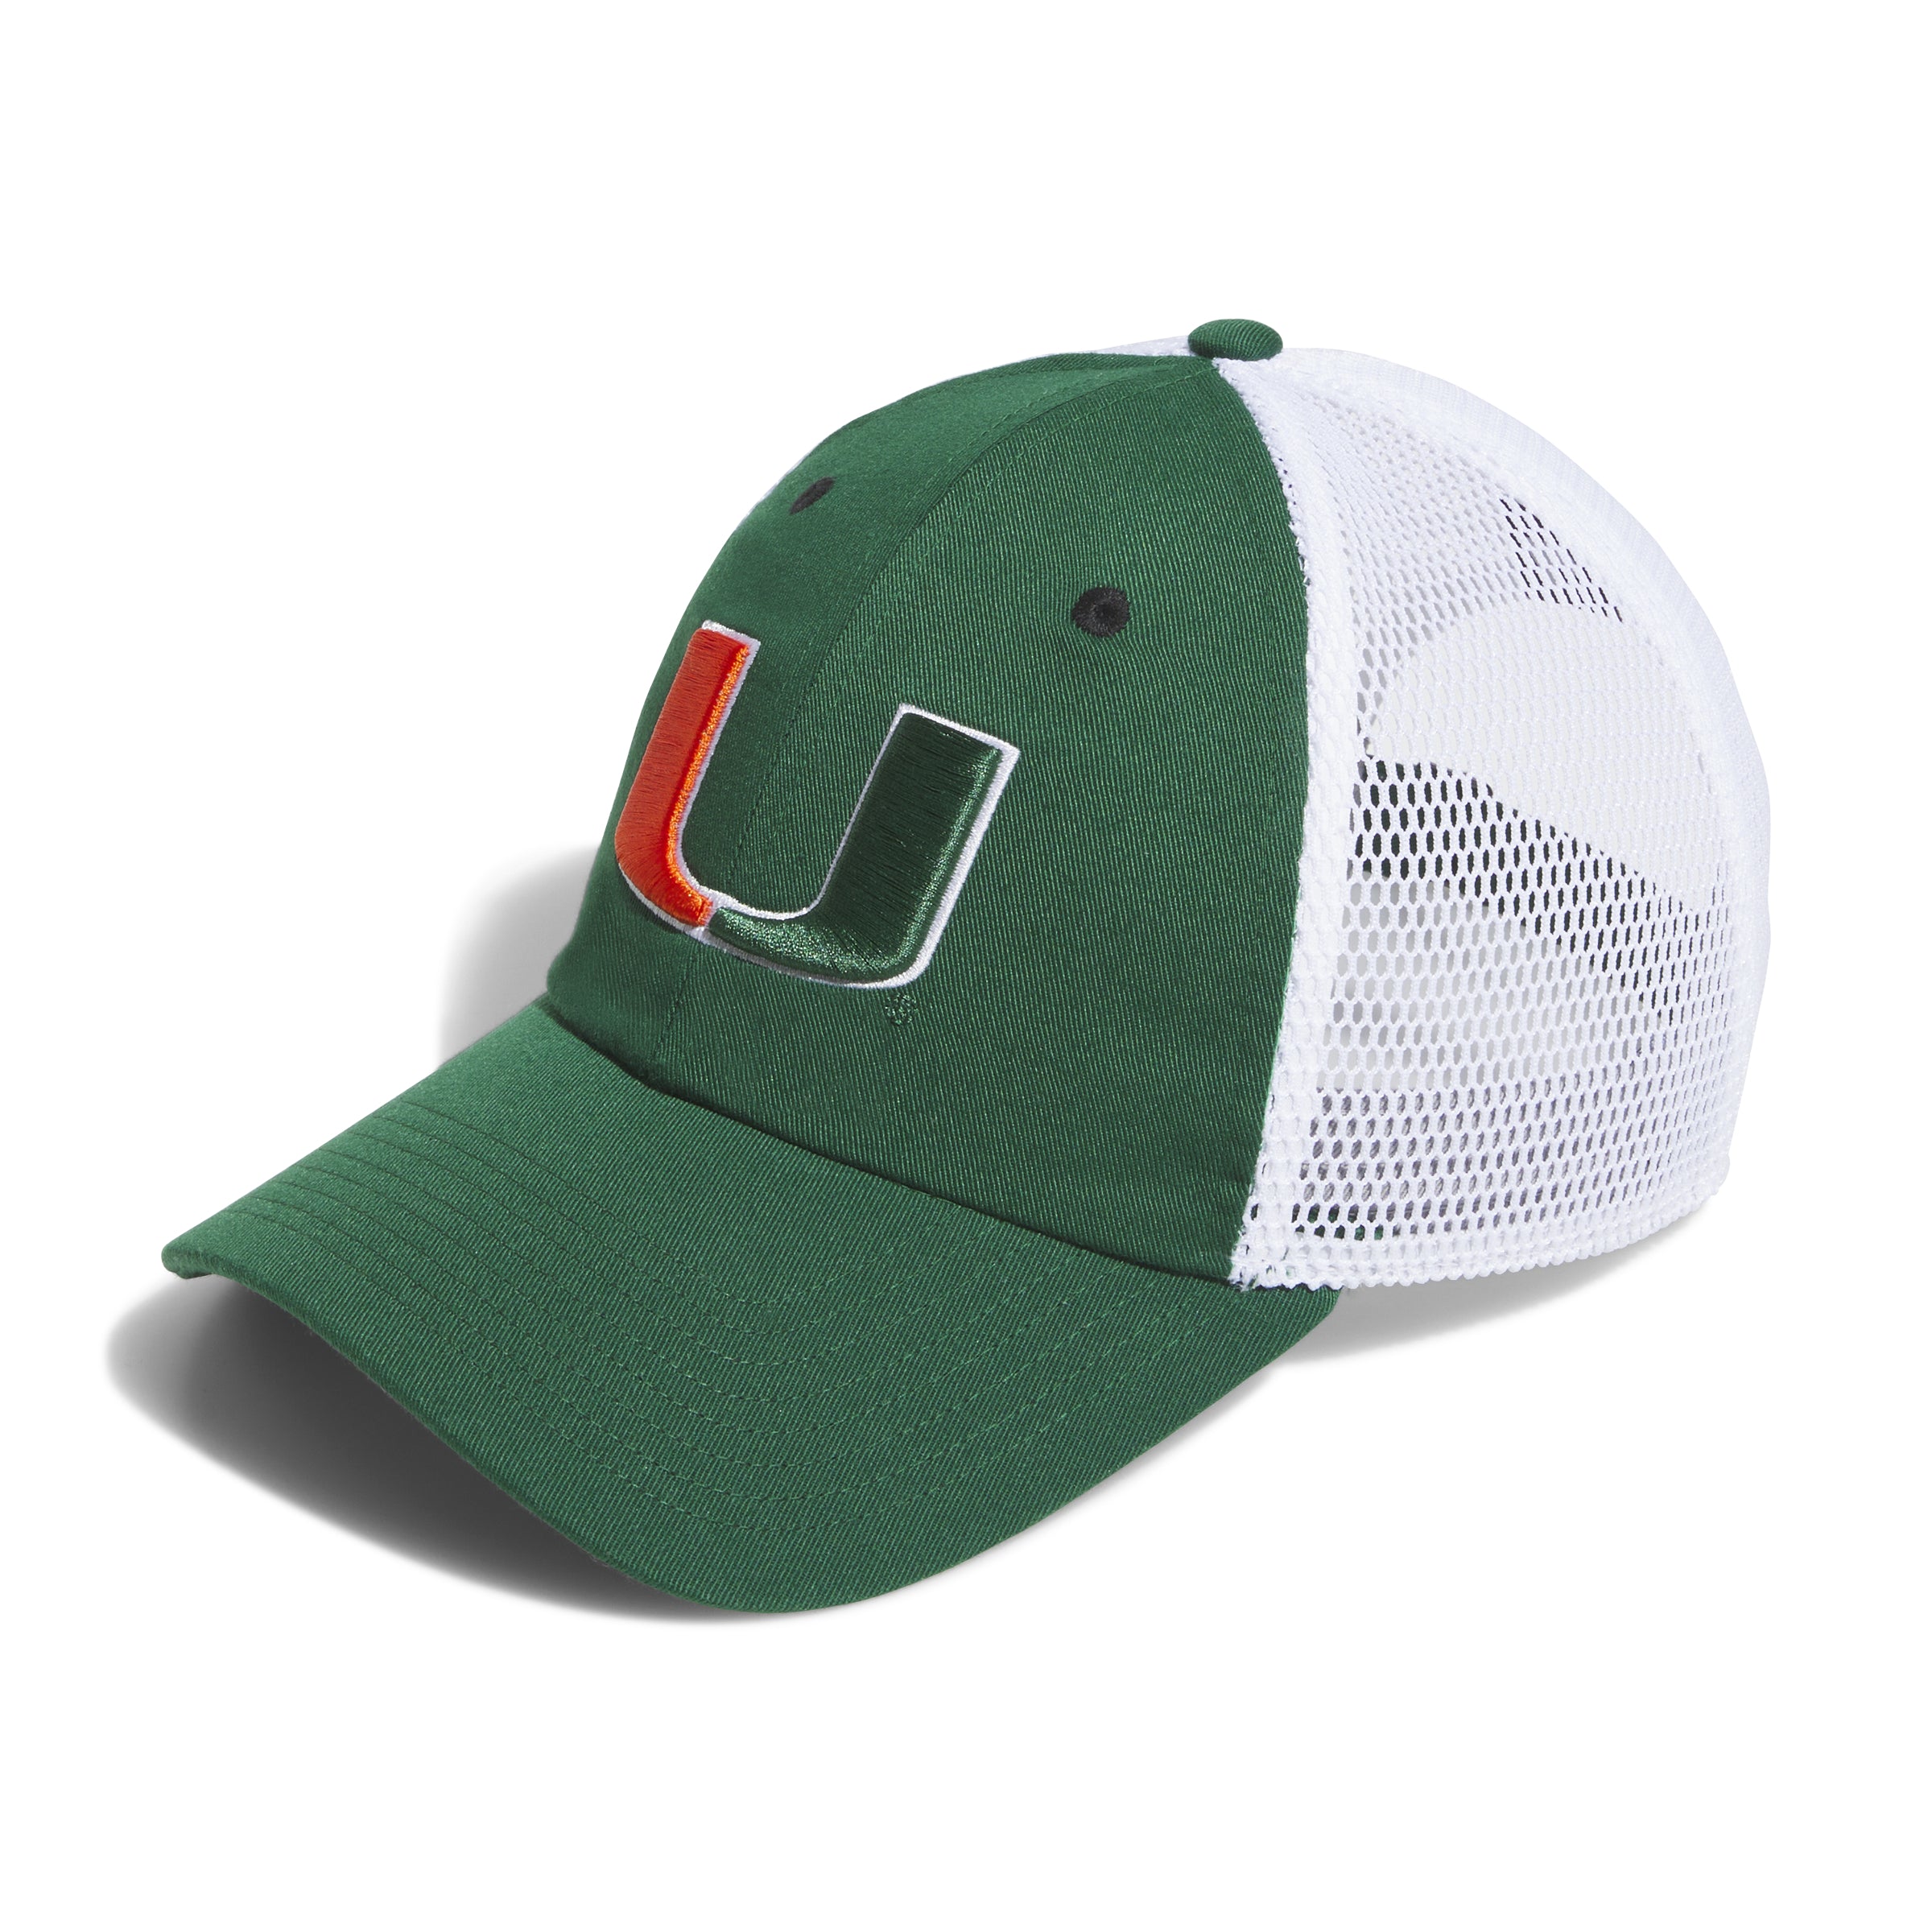 Florida True Lineman Green/White hat